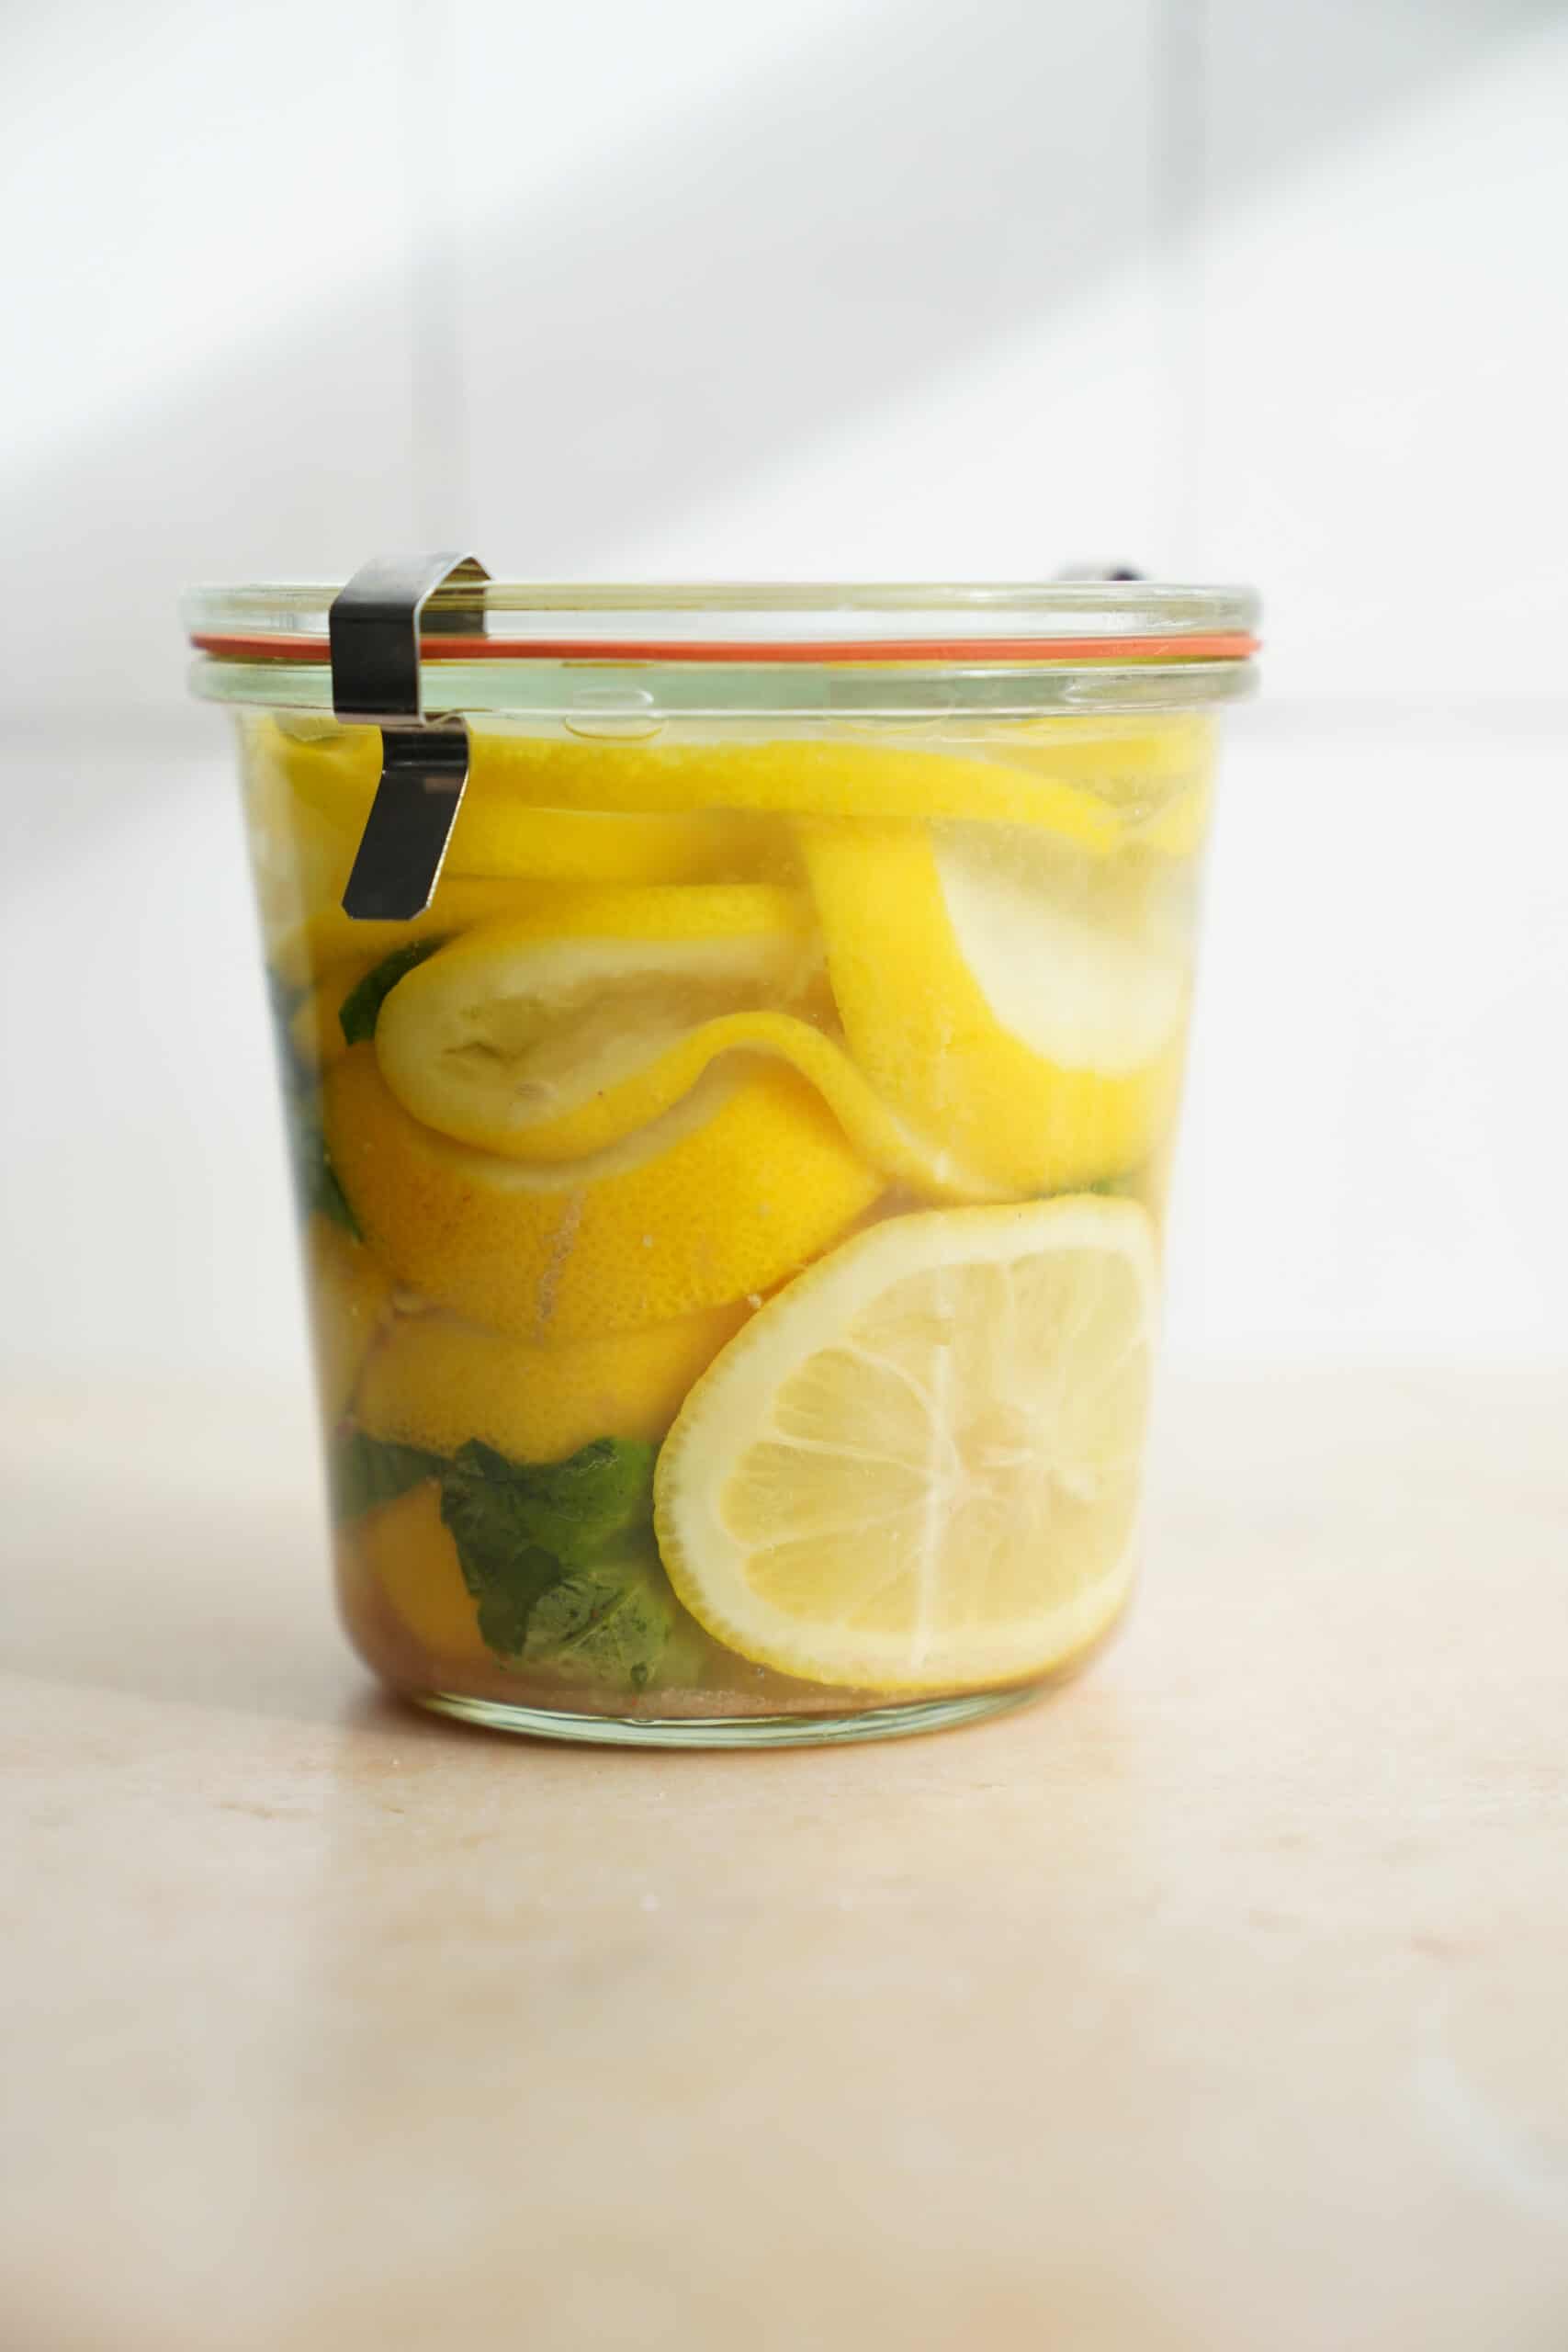 Sealed lemons in a jar